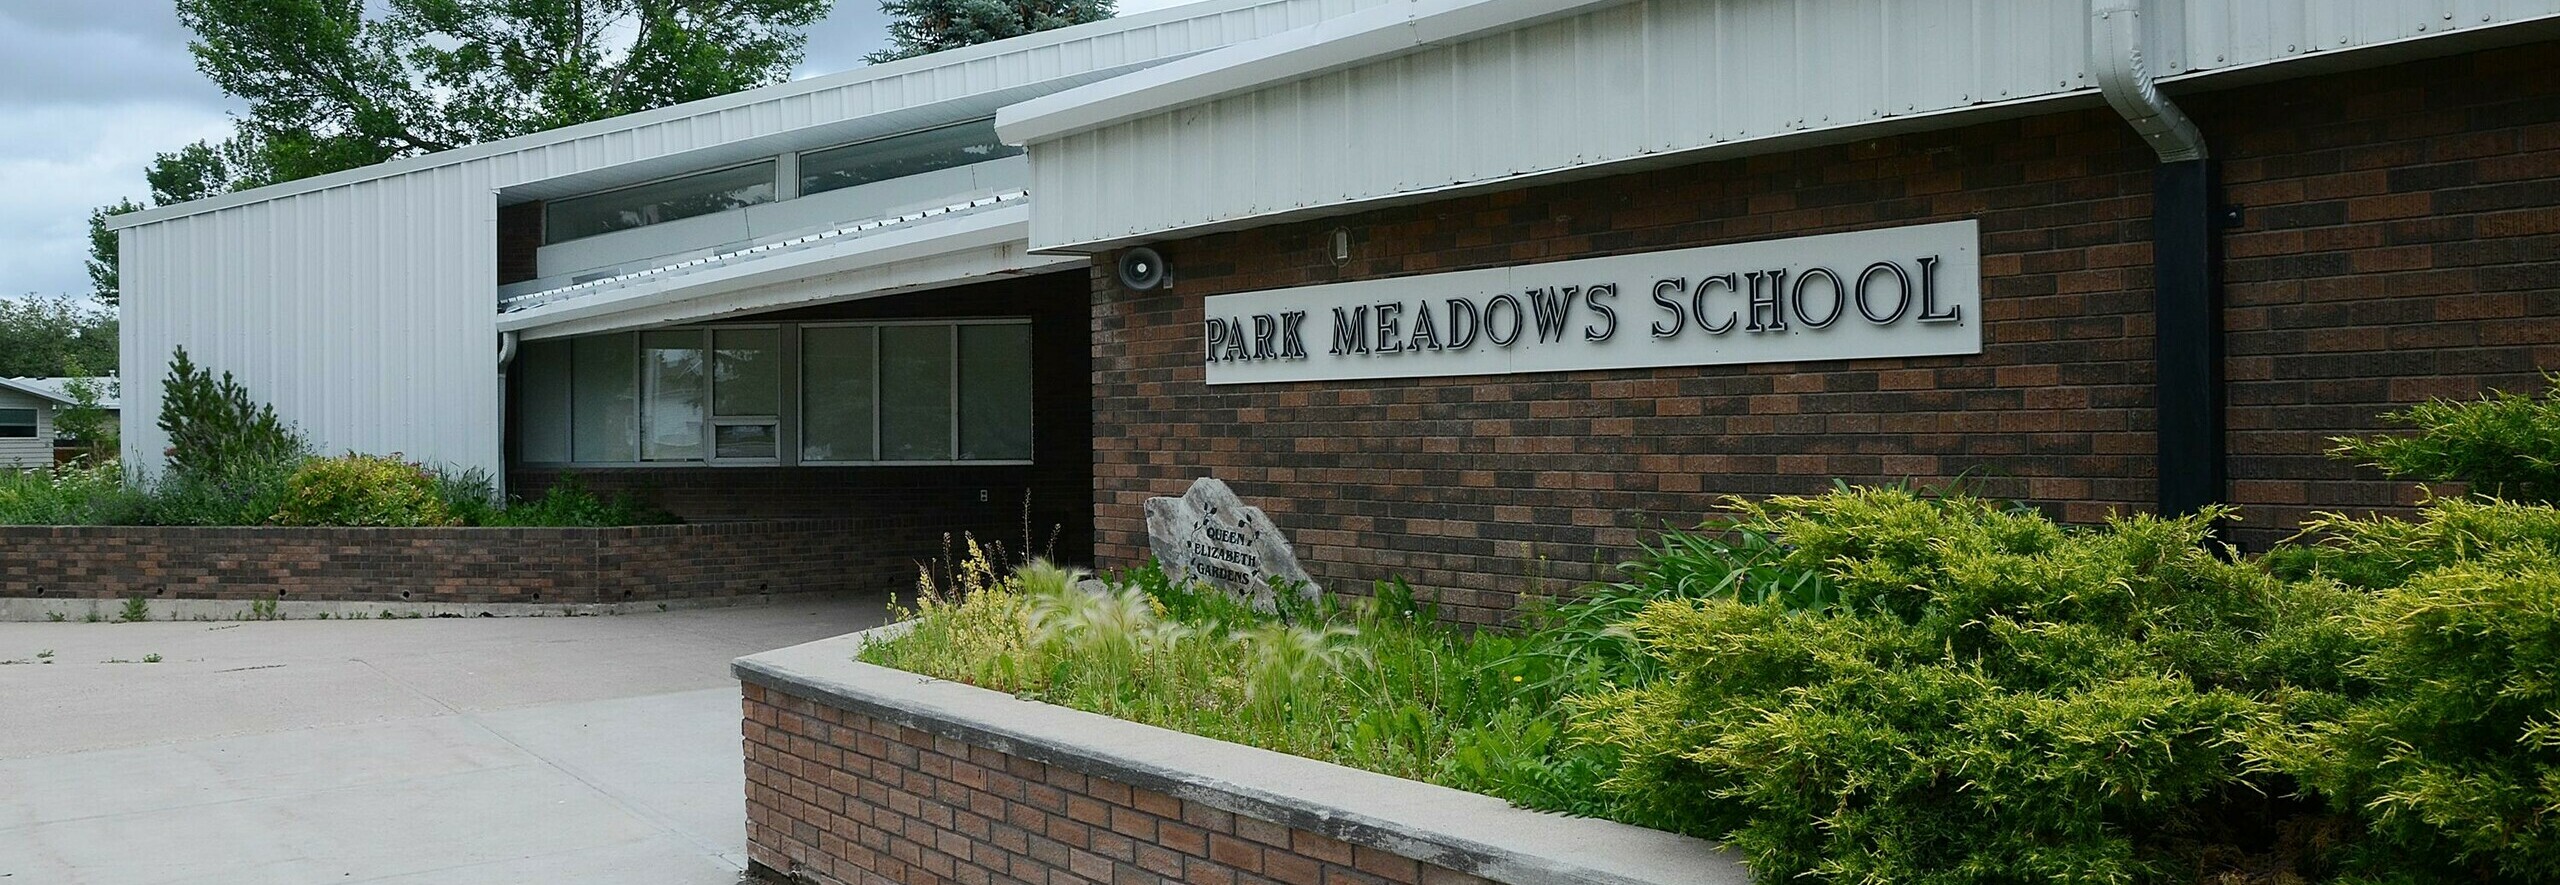 Park Meadows Elementary School Banner Photo